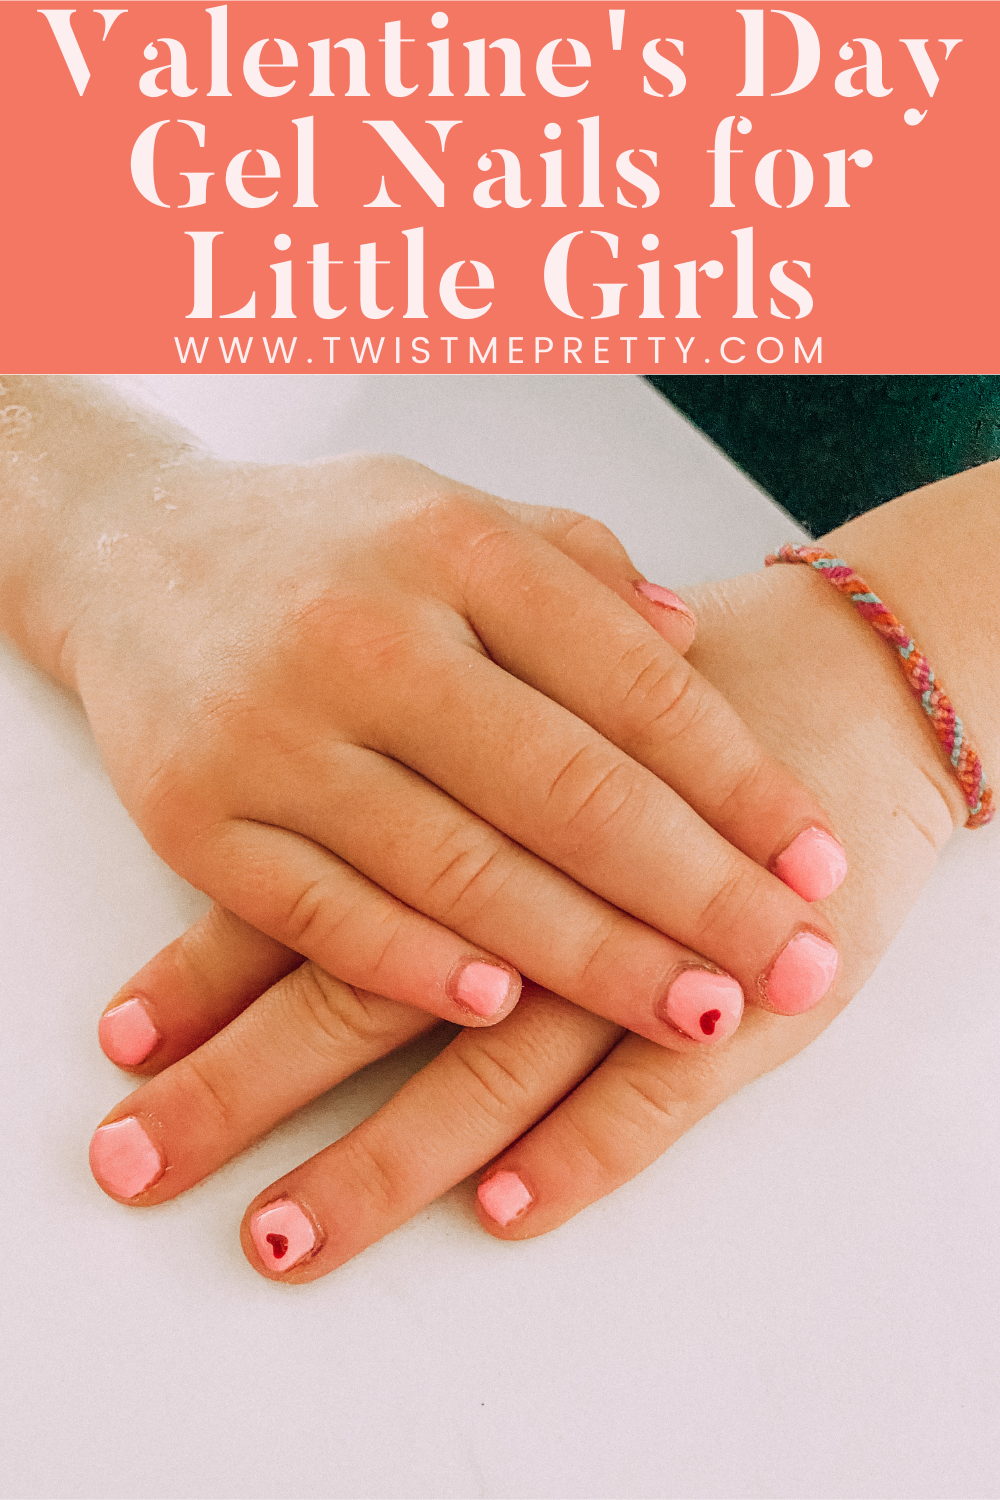 Valentine's Day Gel Nails for Little Girls - Twist Me Pretty